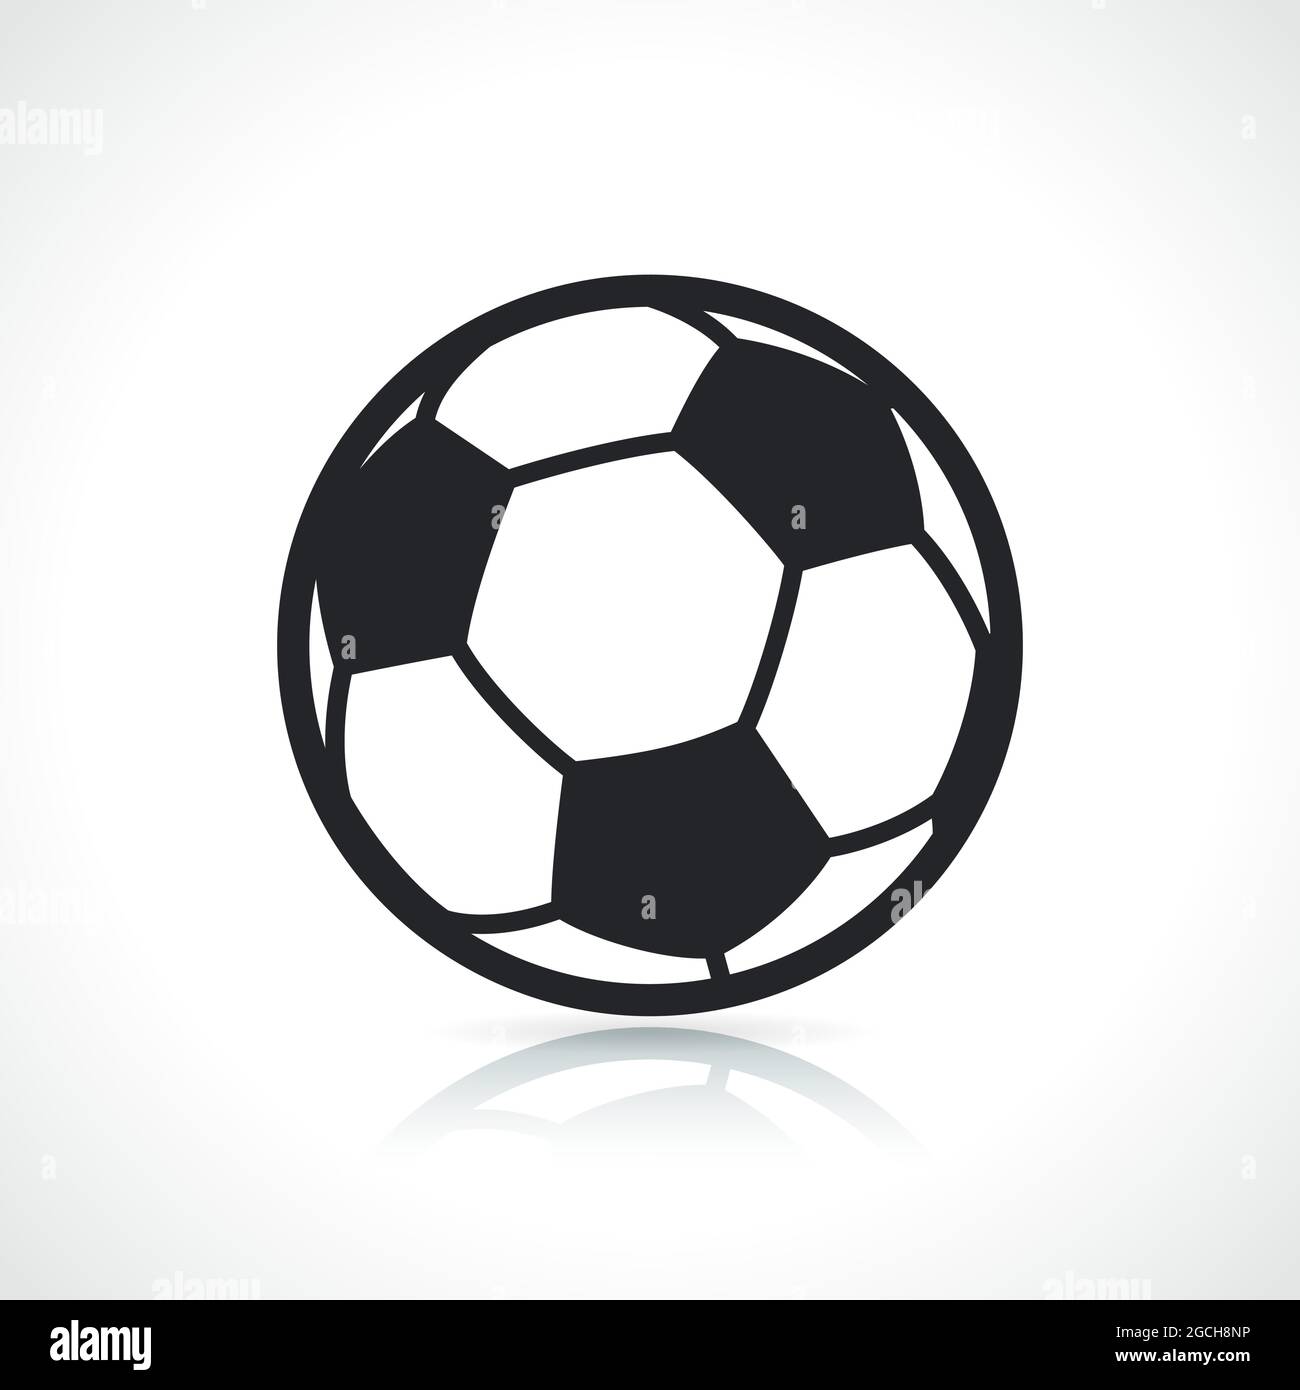 Design isolé emblématique du football ou du ballon de football Illustration de Vecteur